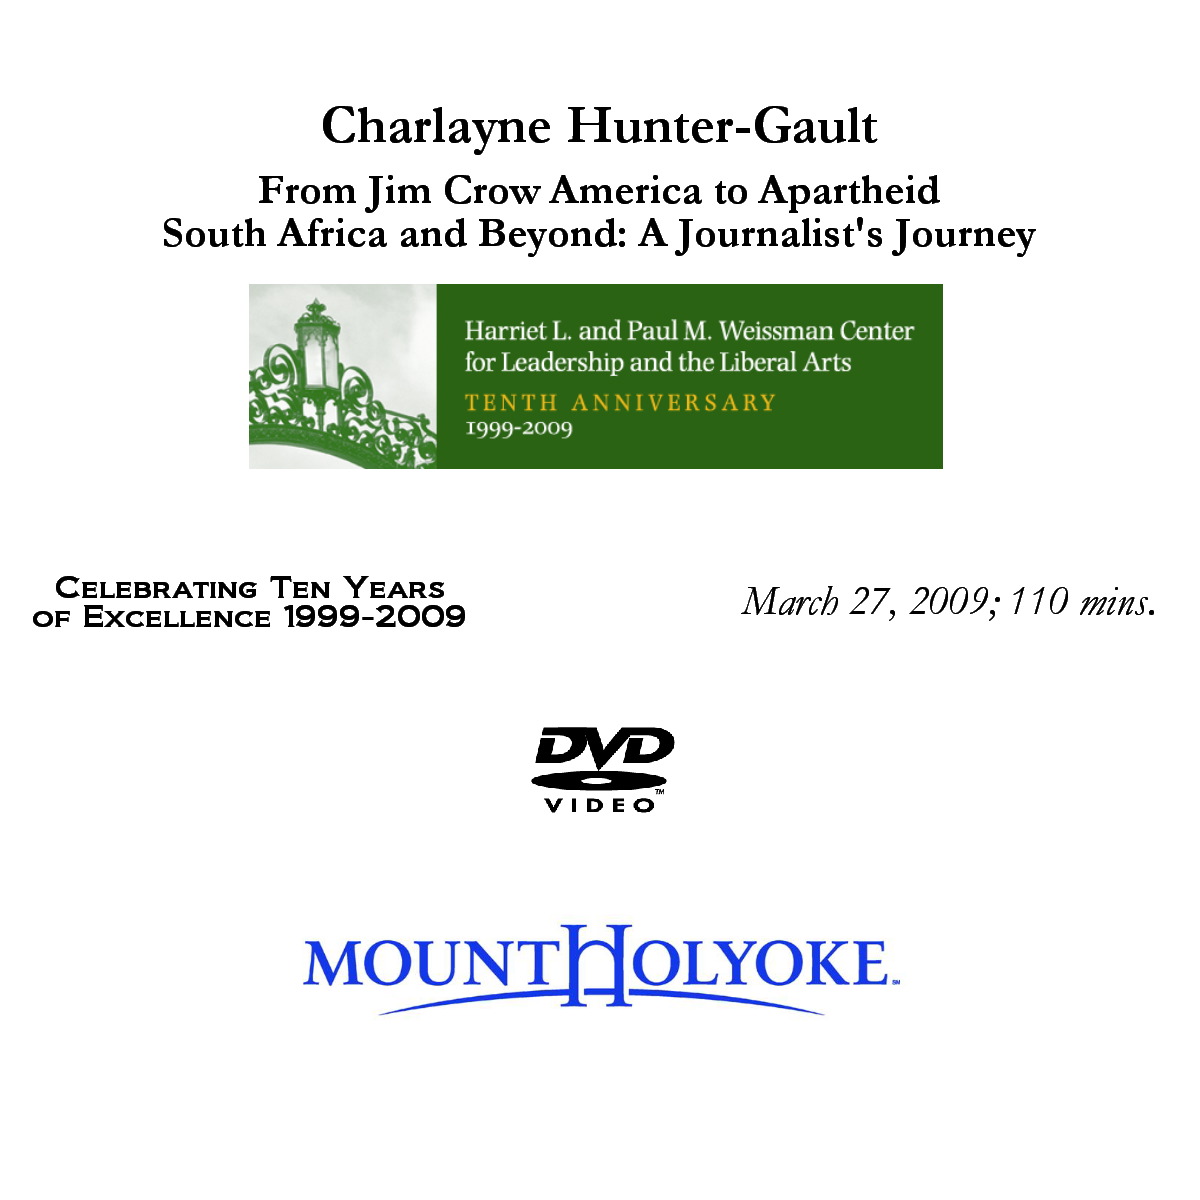 Charlayne H-G DVD layout